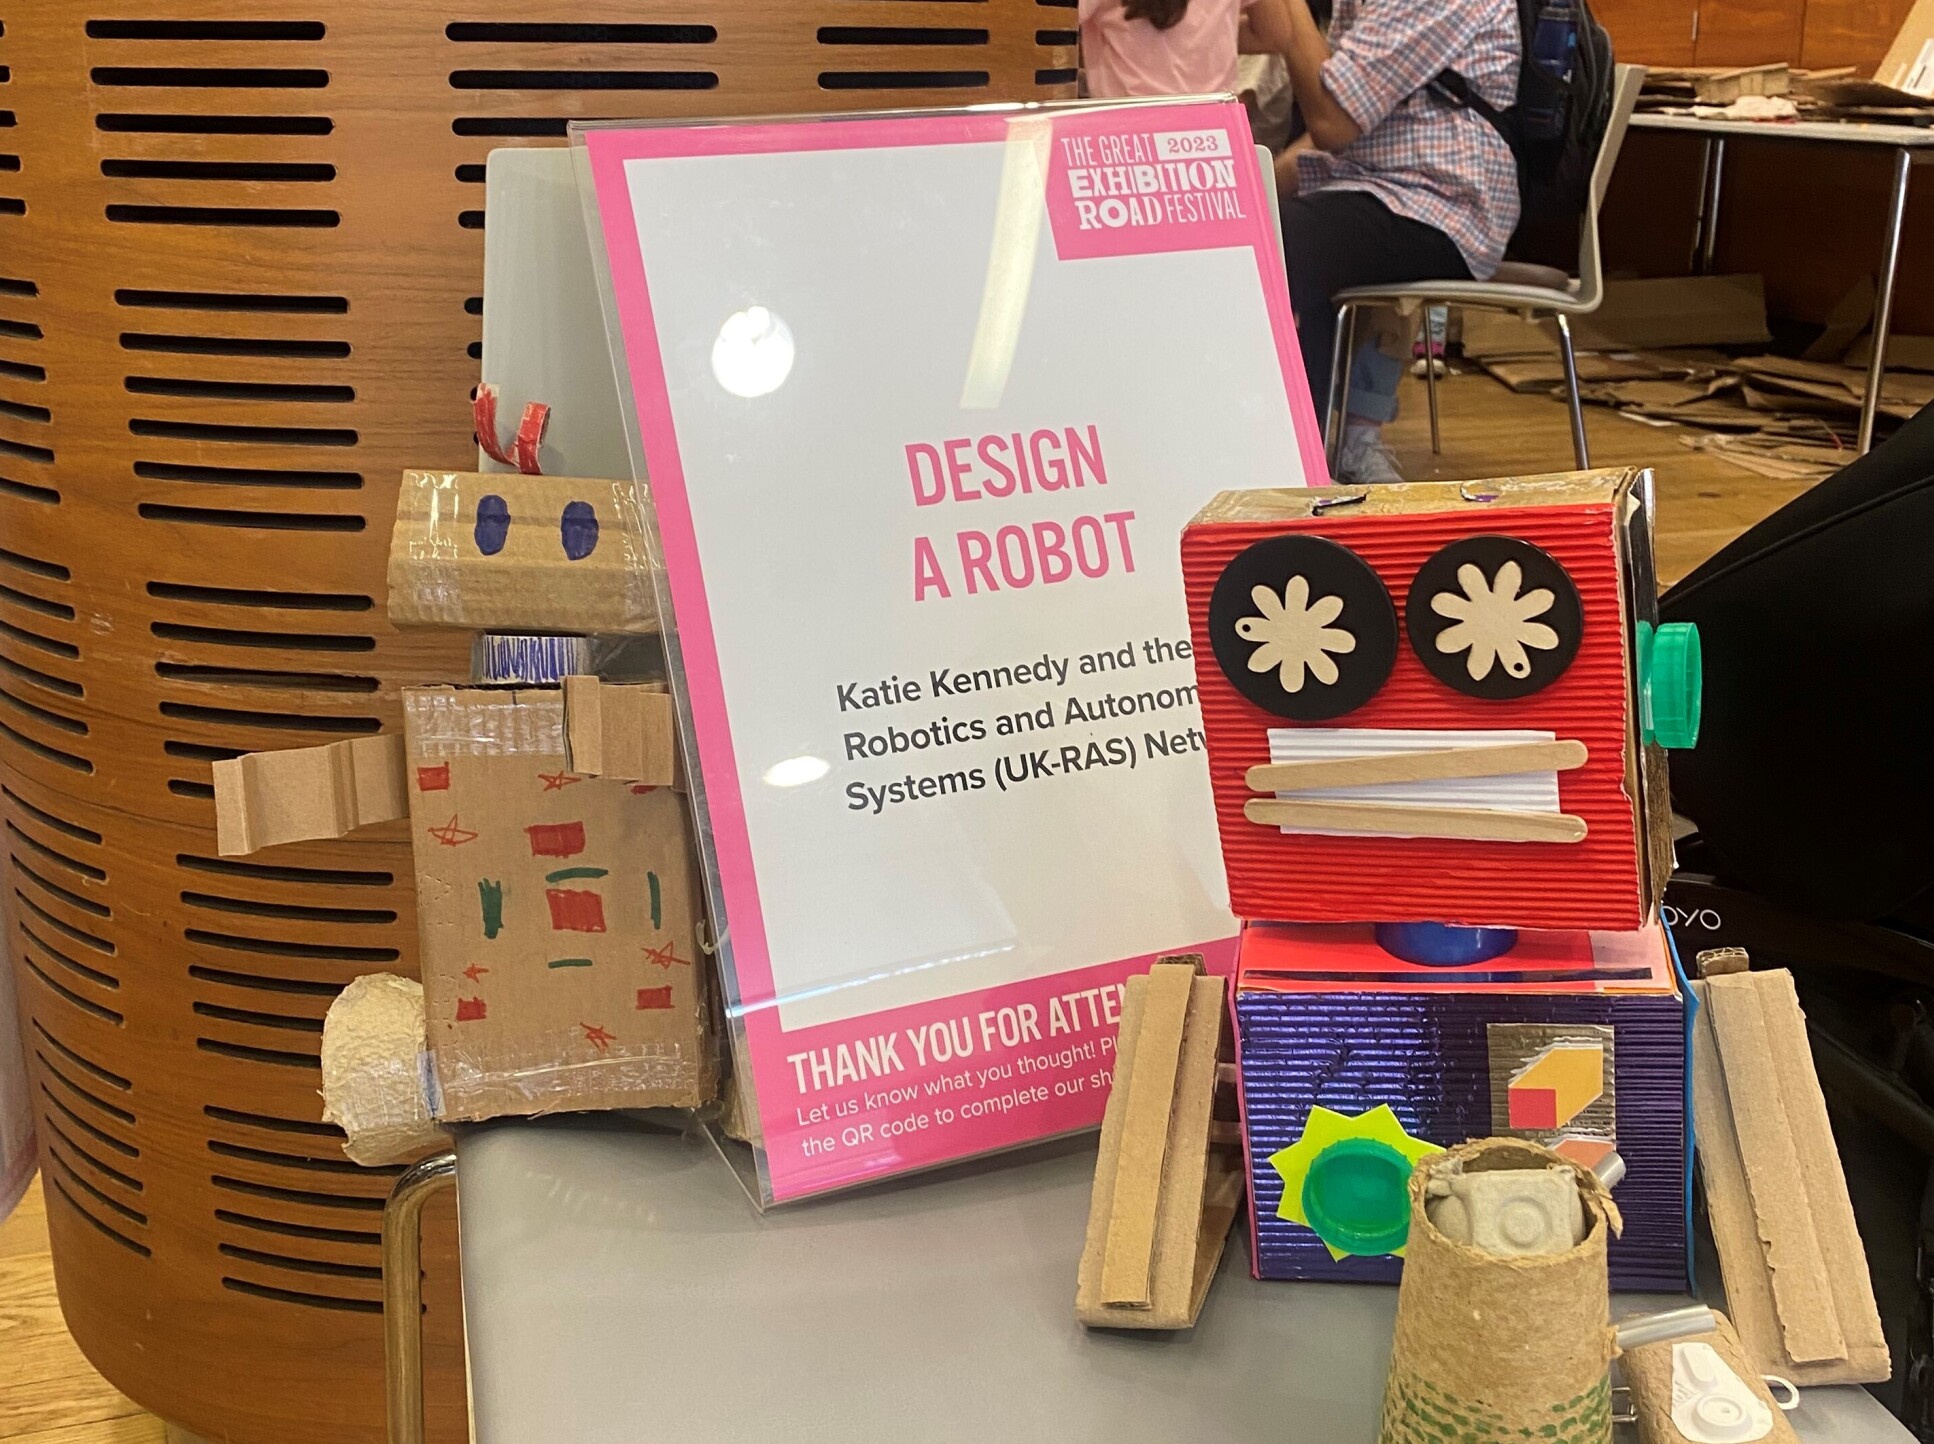 "Design a Robot" sign next to cardboard robots